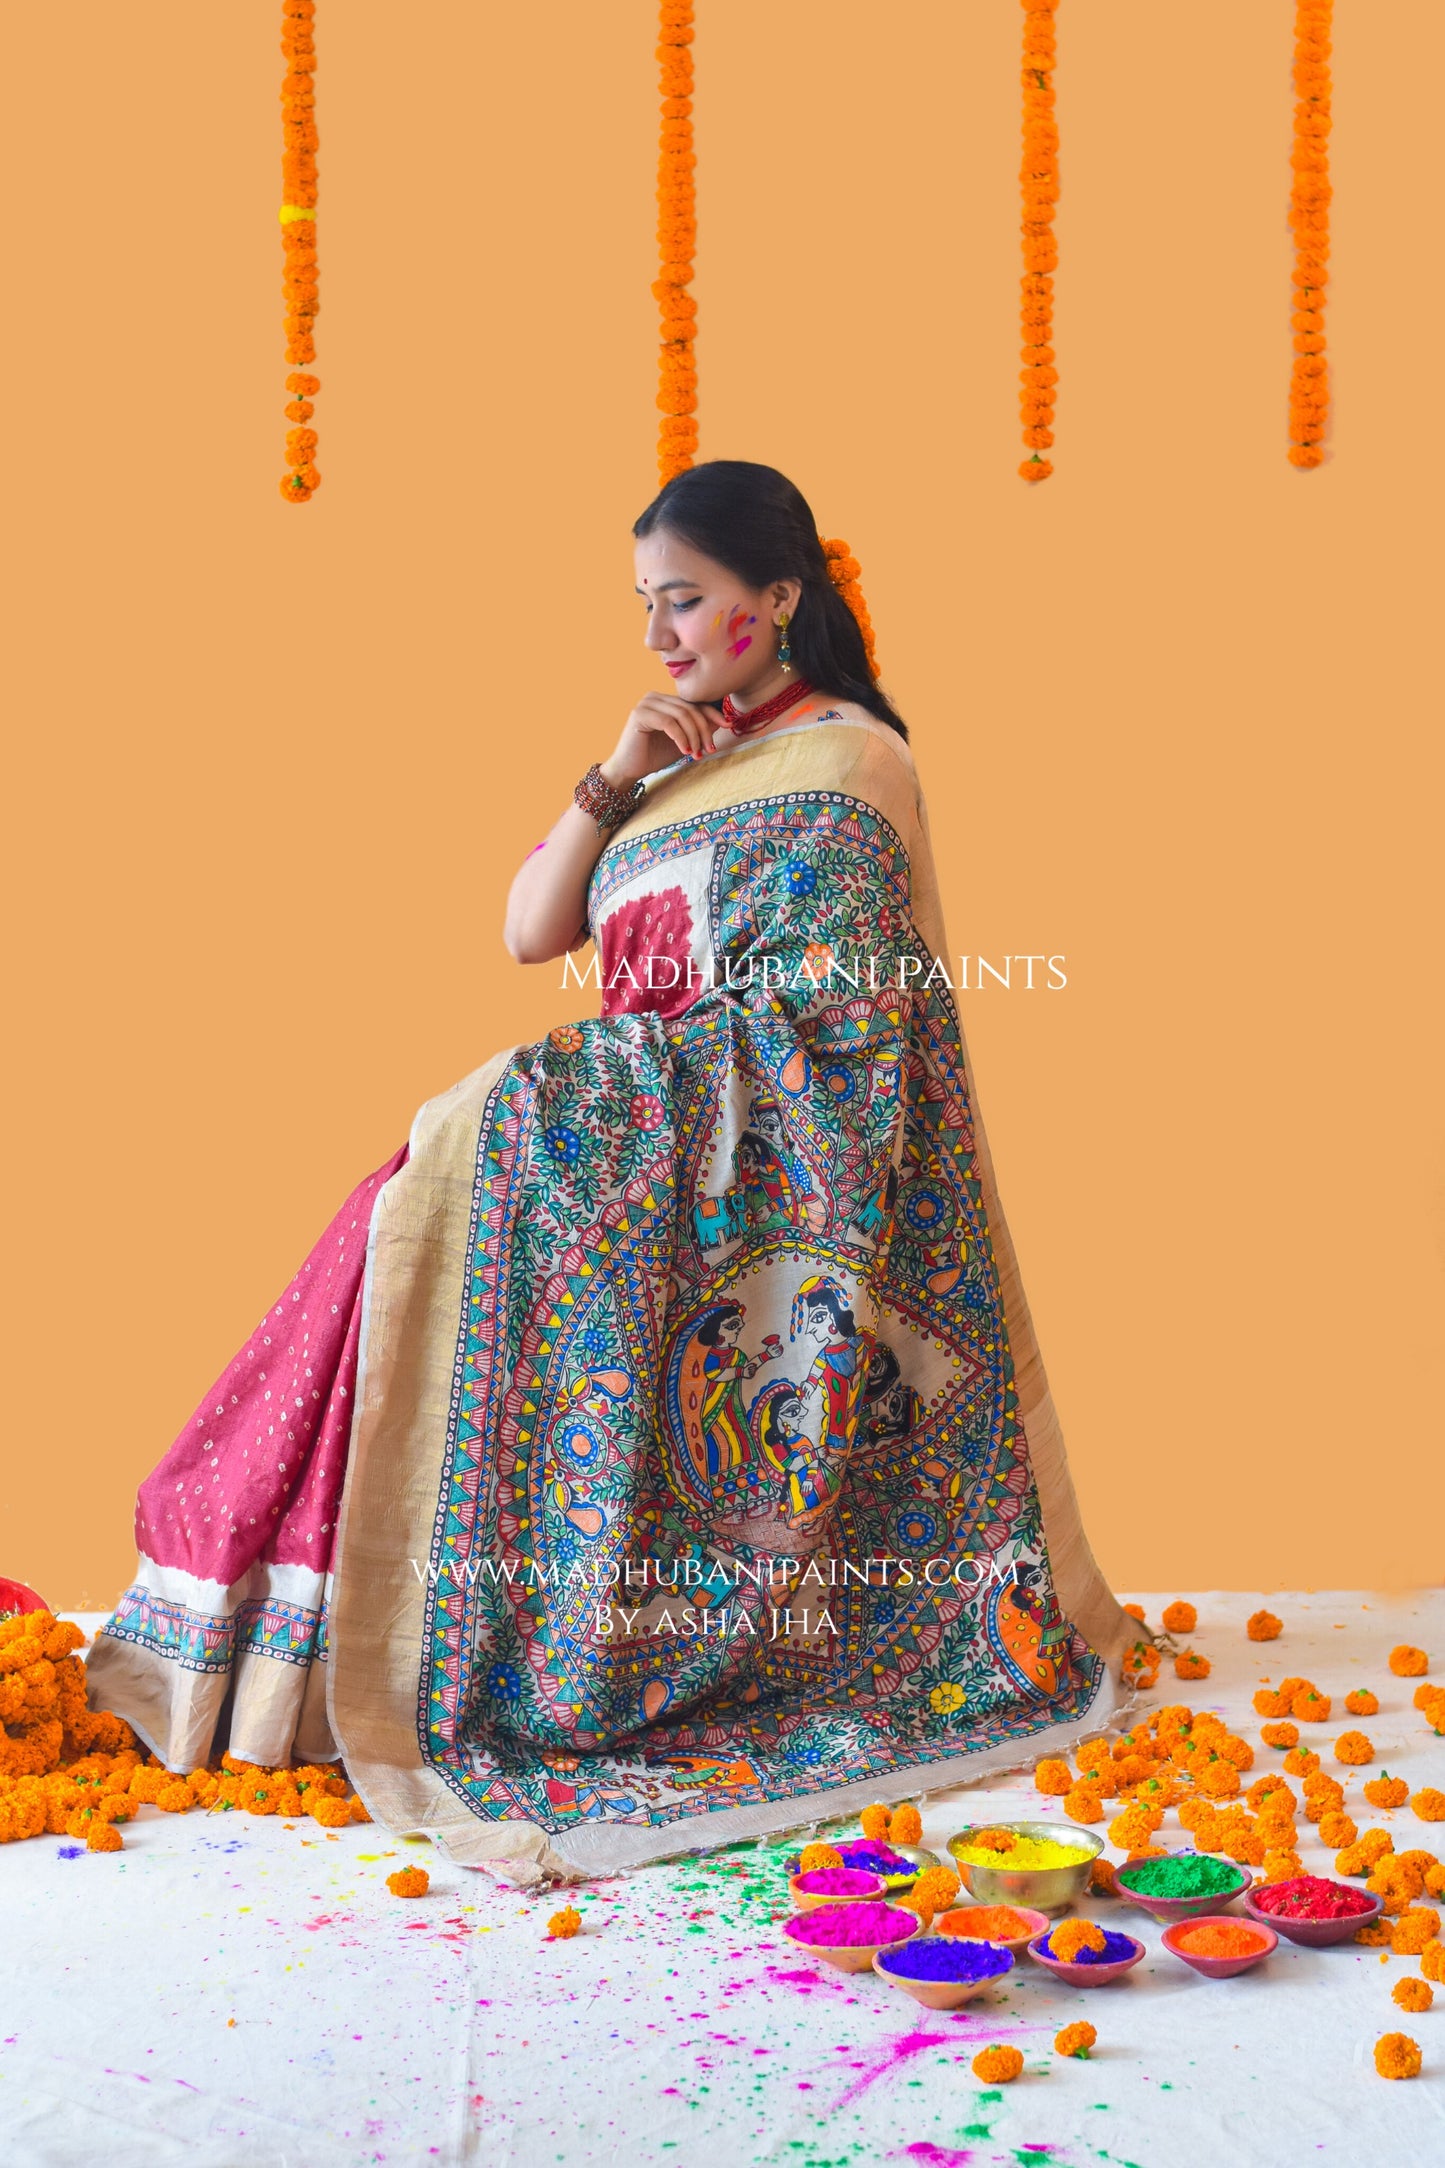 GAURI PUJA Hand-painted Madhubani Bandhini Tussar Silk Saree Blouse Set